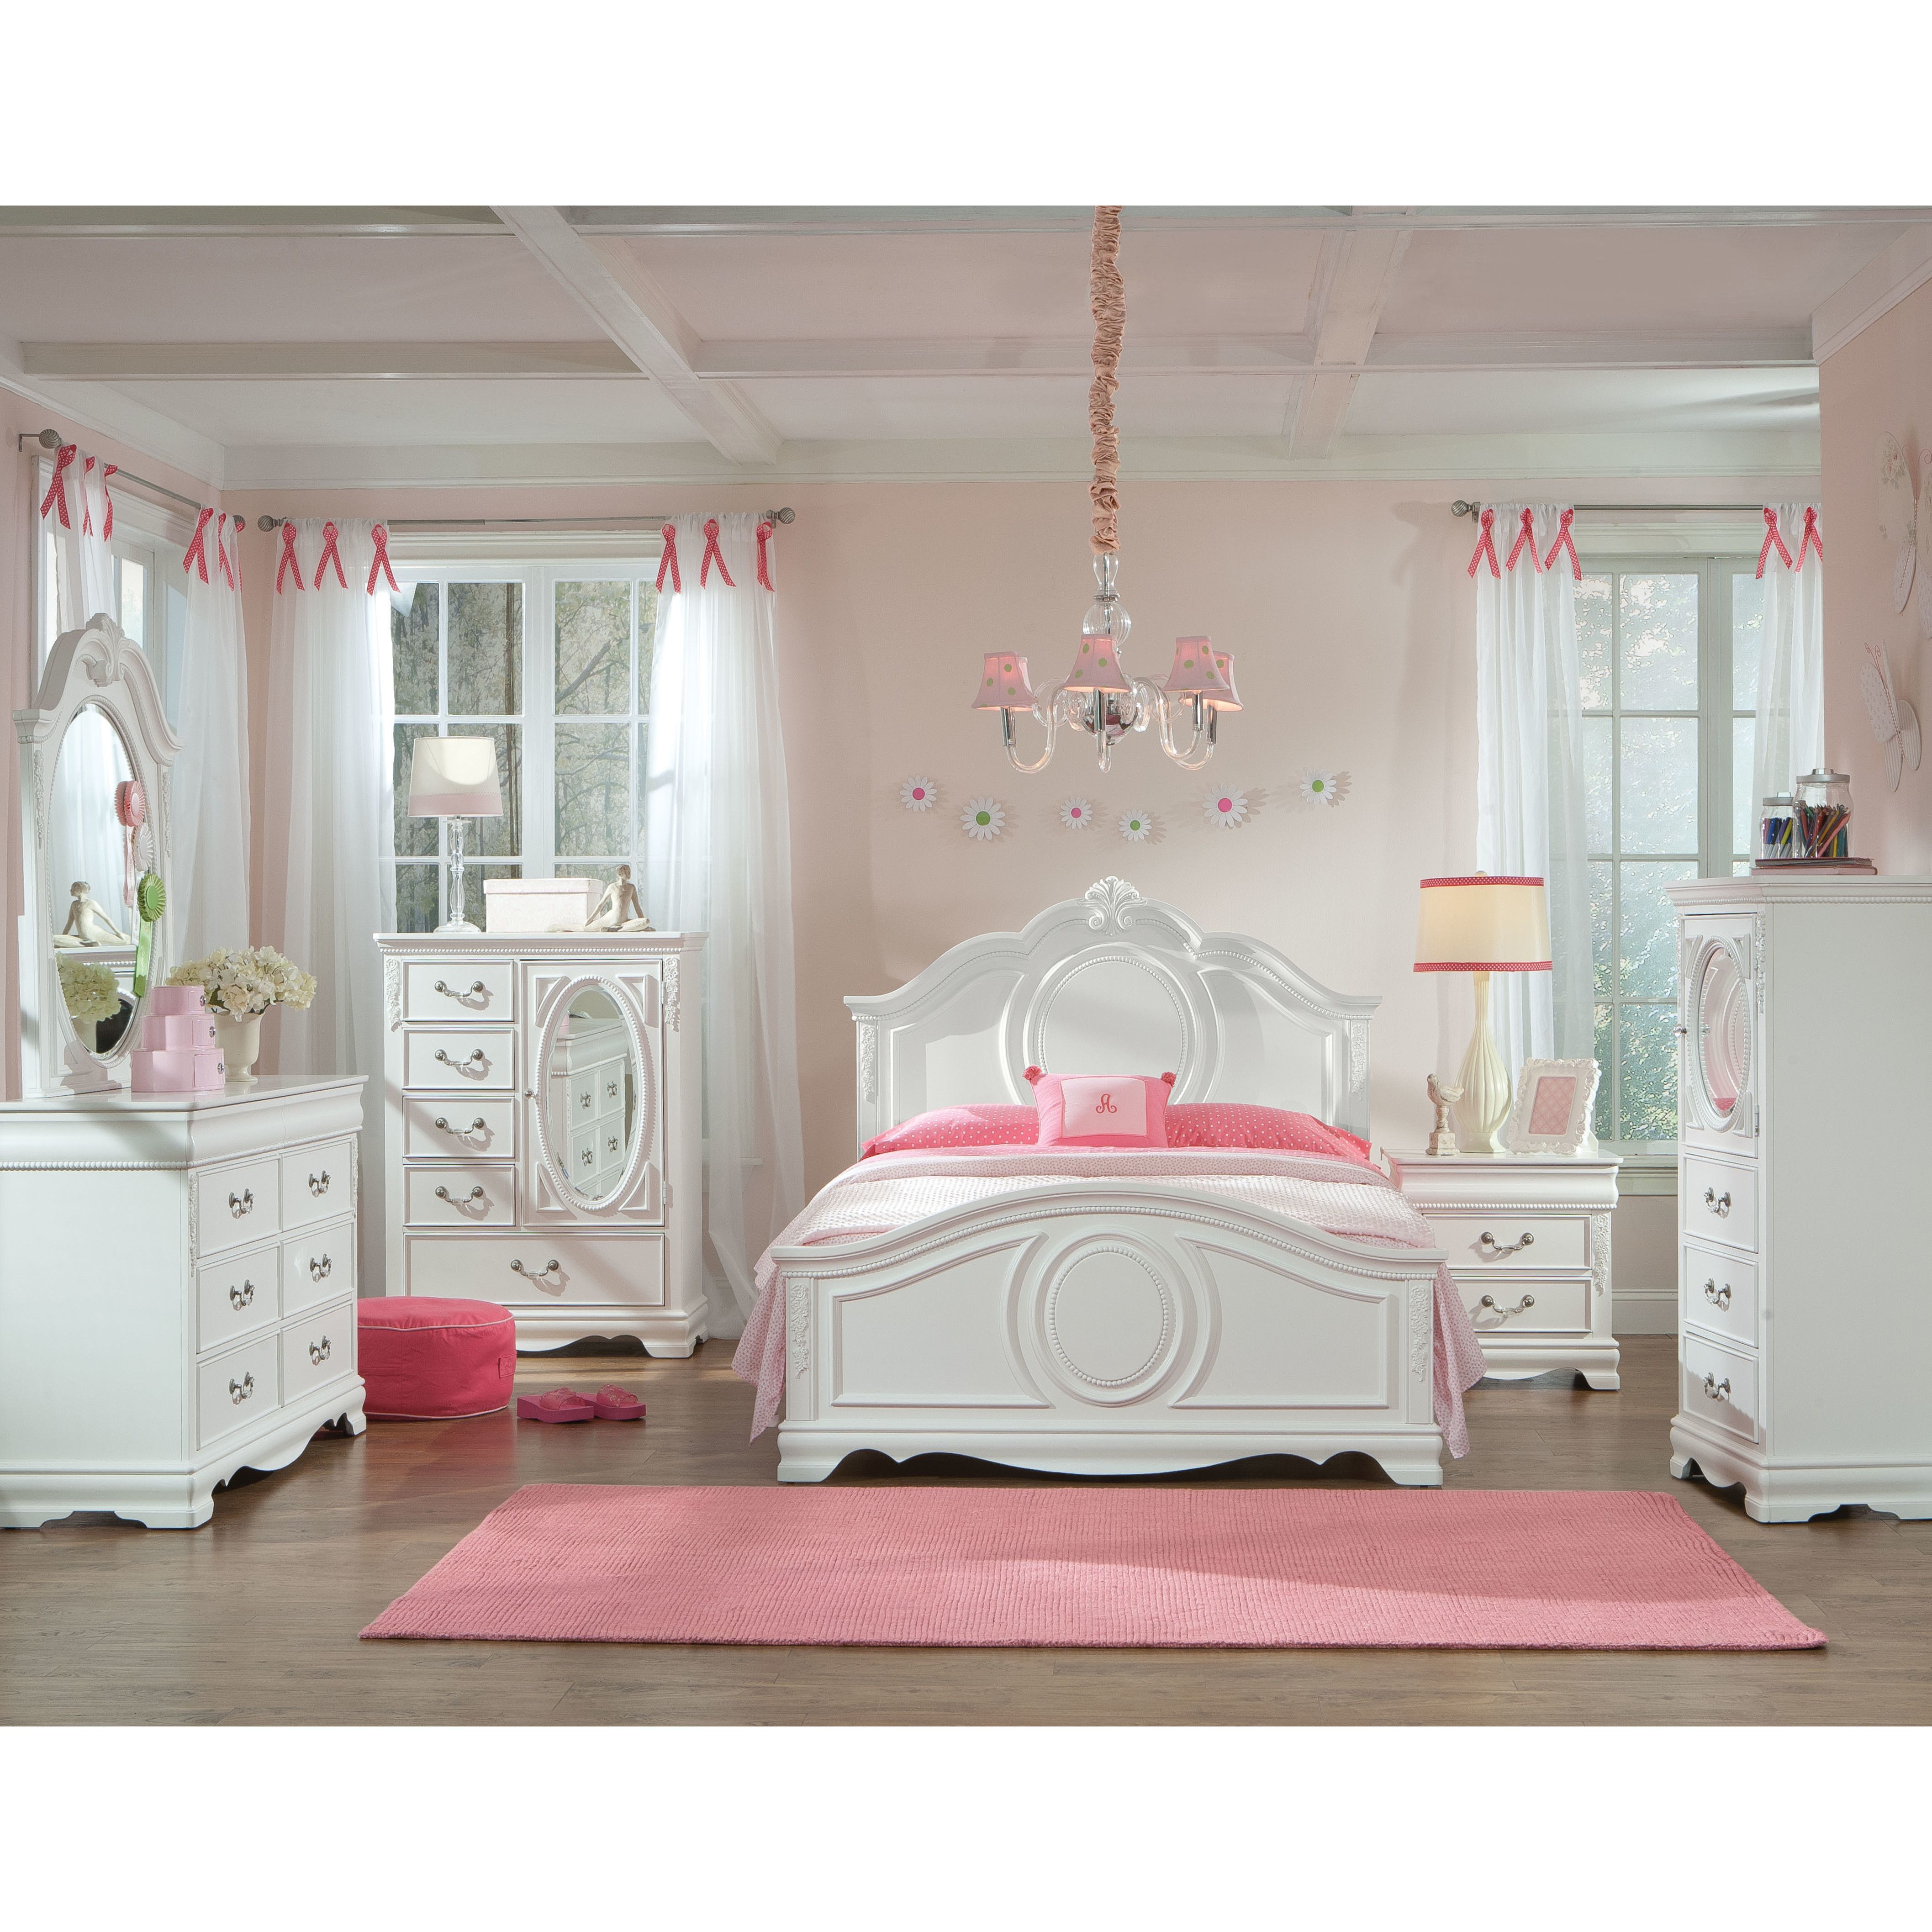 Girls bedroom sets complete bedroom set for girls QXFAXBI